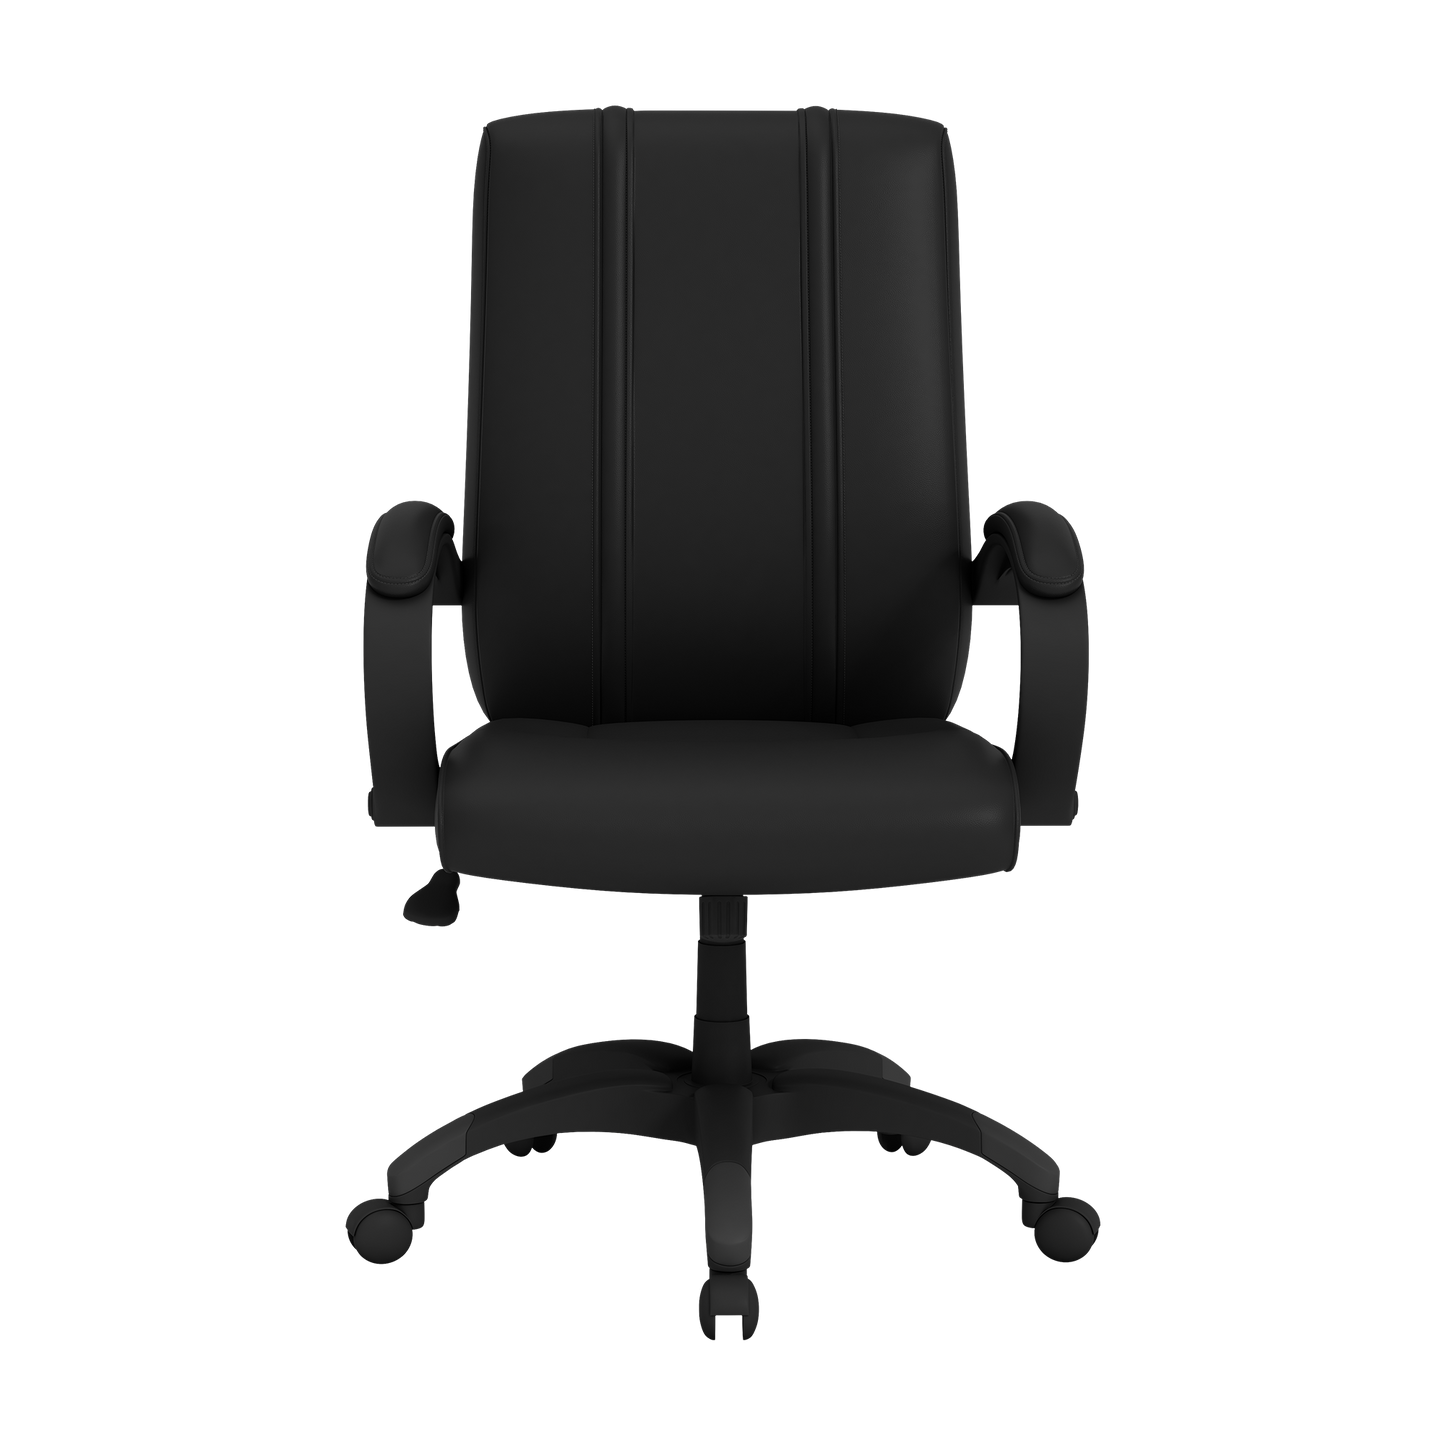 Office Chair 1000 with Dallas Mavericks